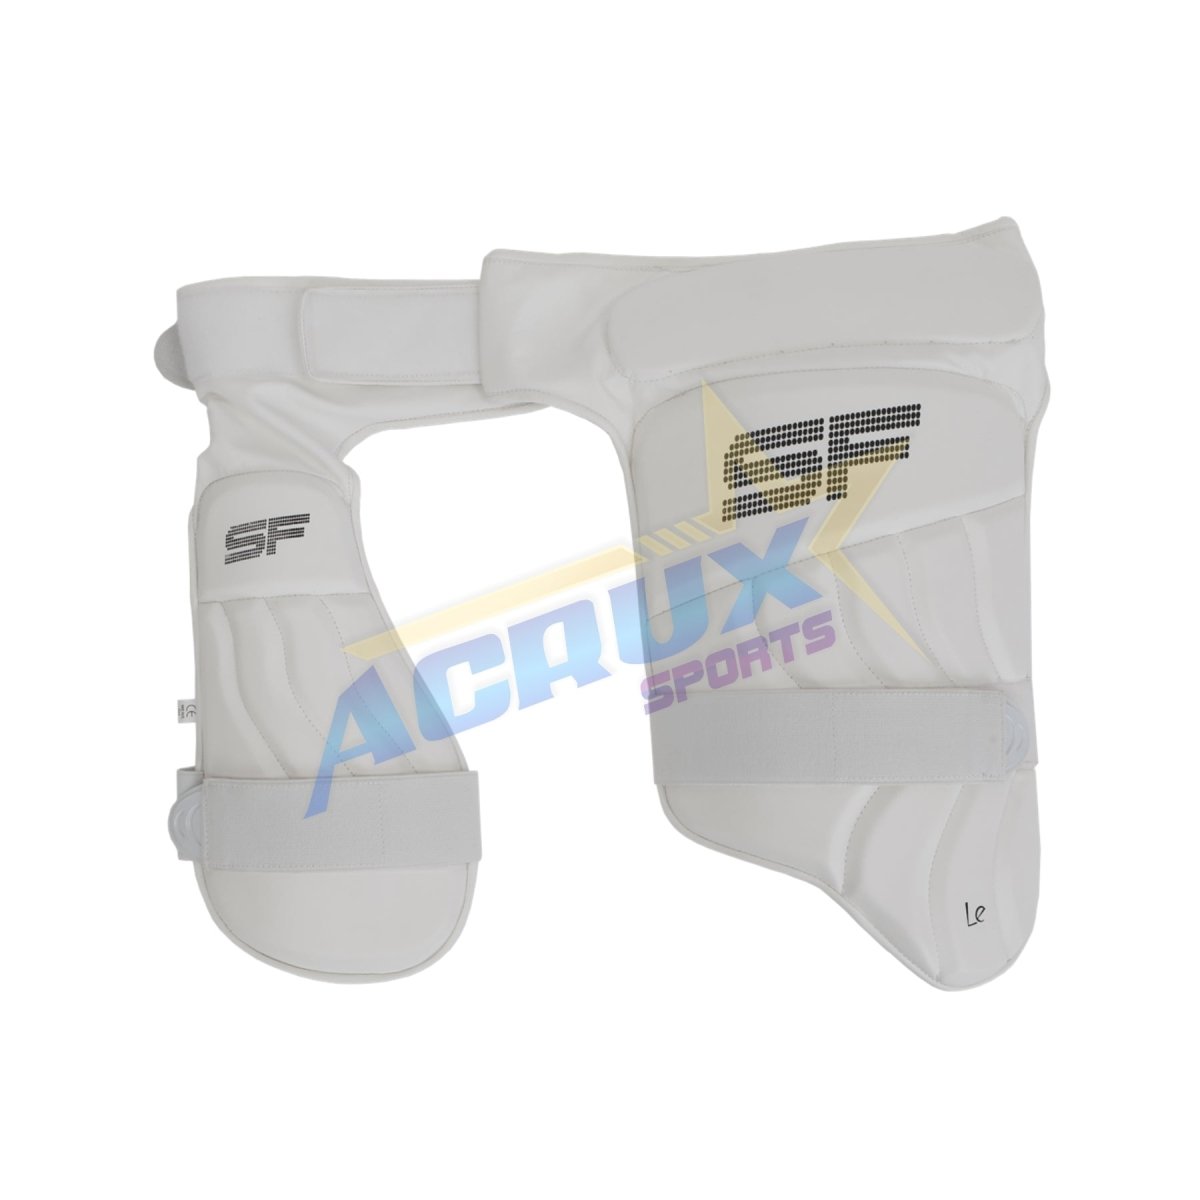 SF Limited Edition Cricket Thigh Guard - Acrux Sports